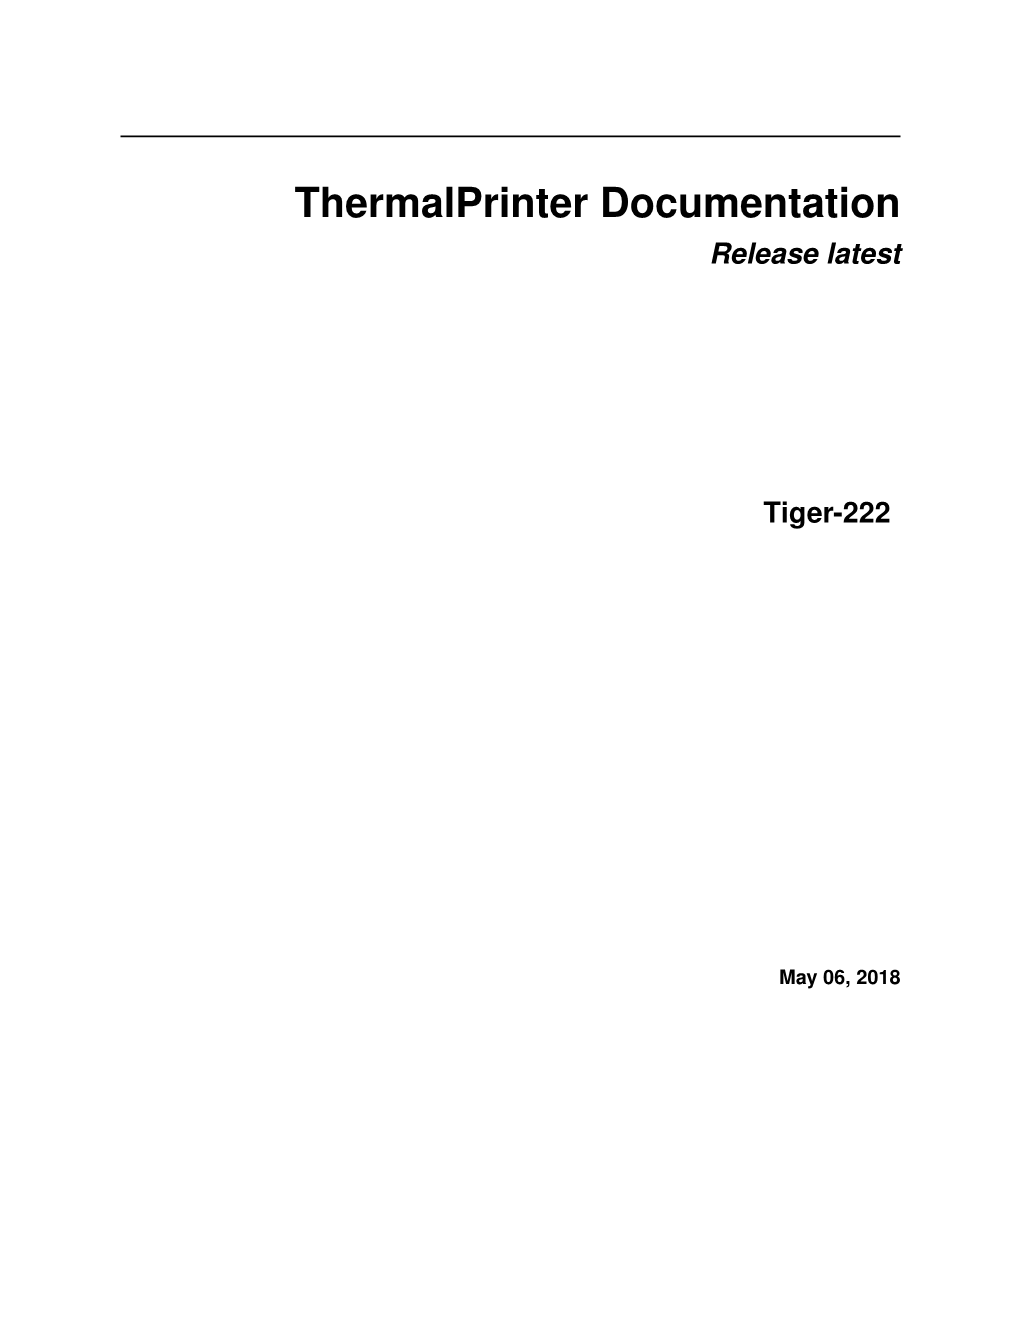 Thermalprinter Documentation Release Latest